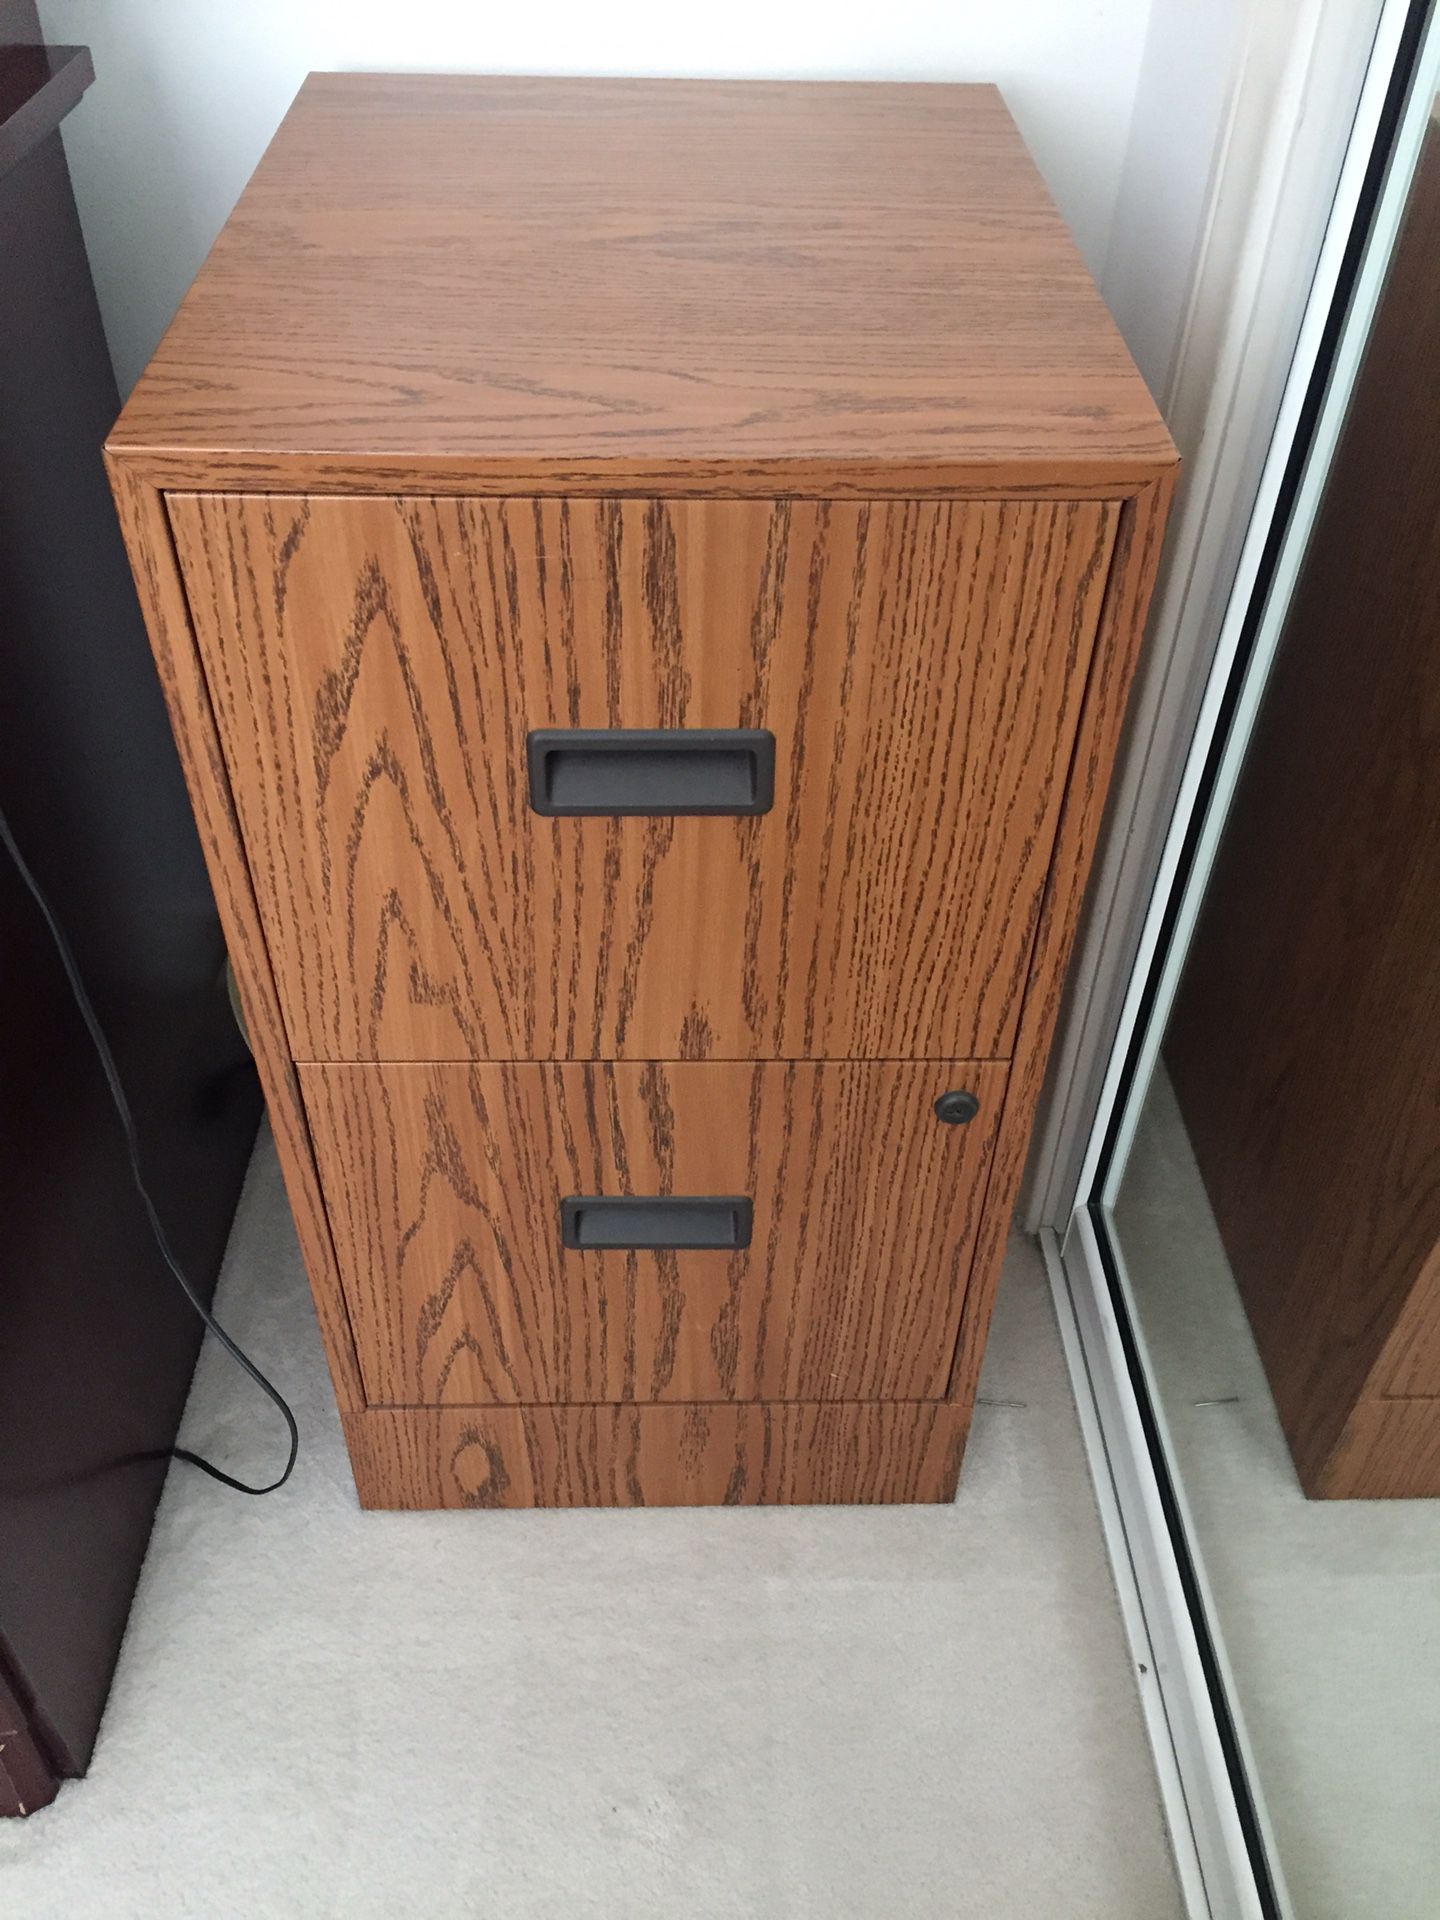 Wood grain file cabinet